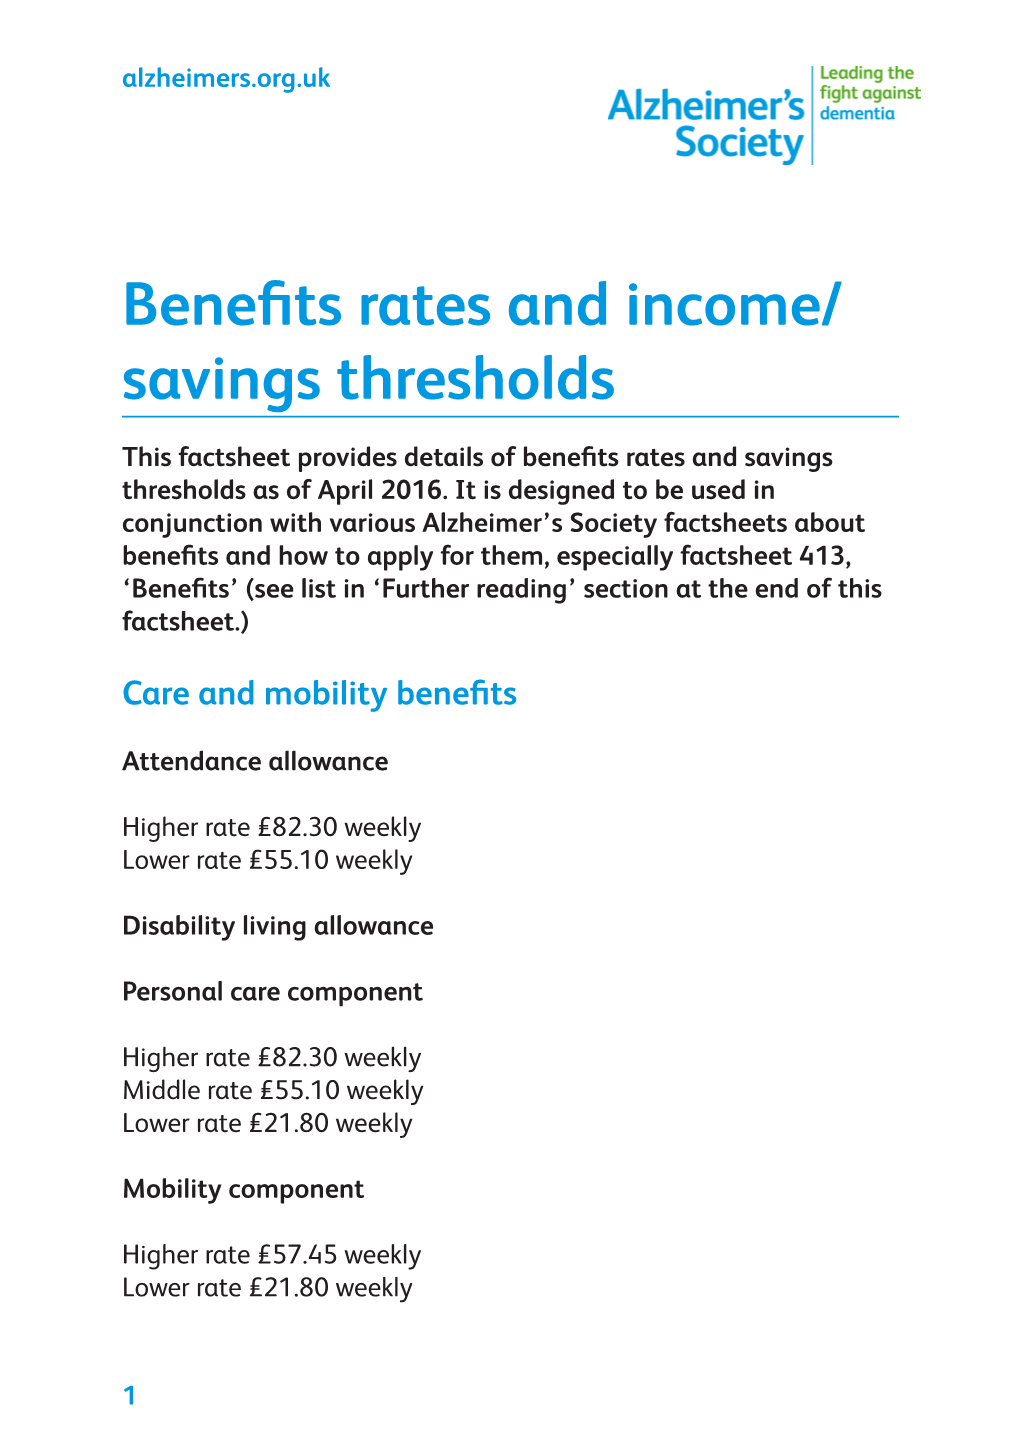 Benefits Rates and Income/Savings Thresholds